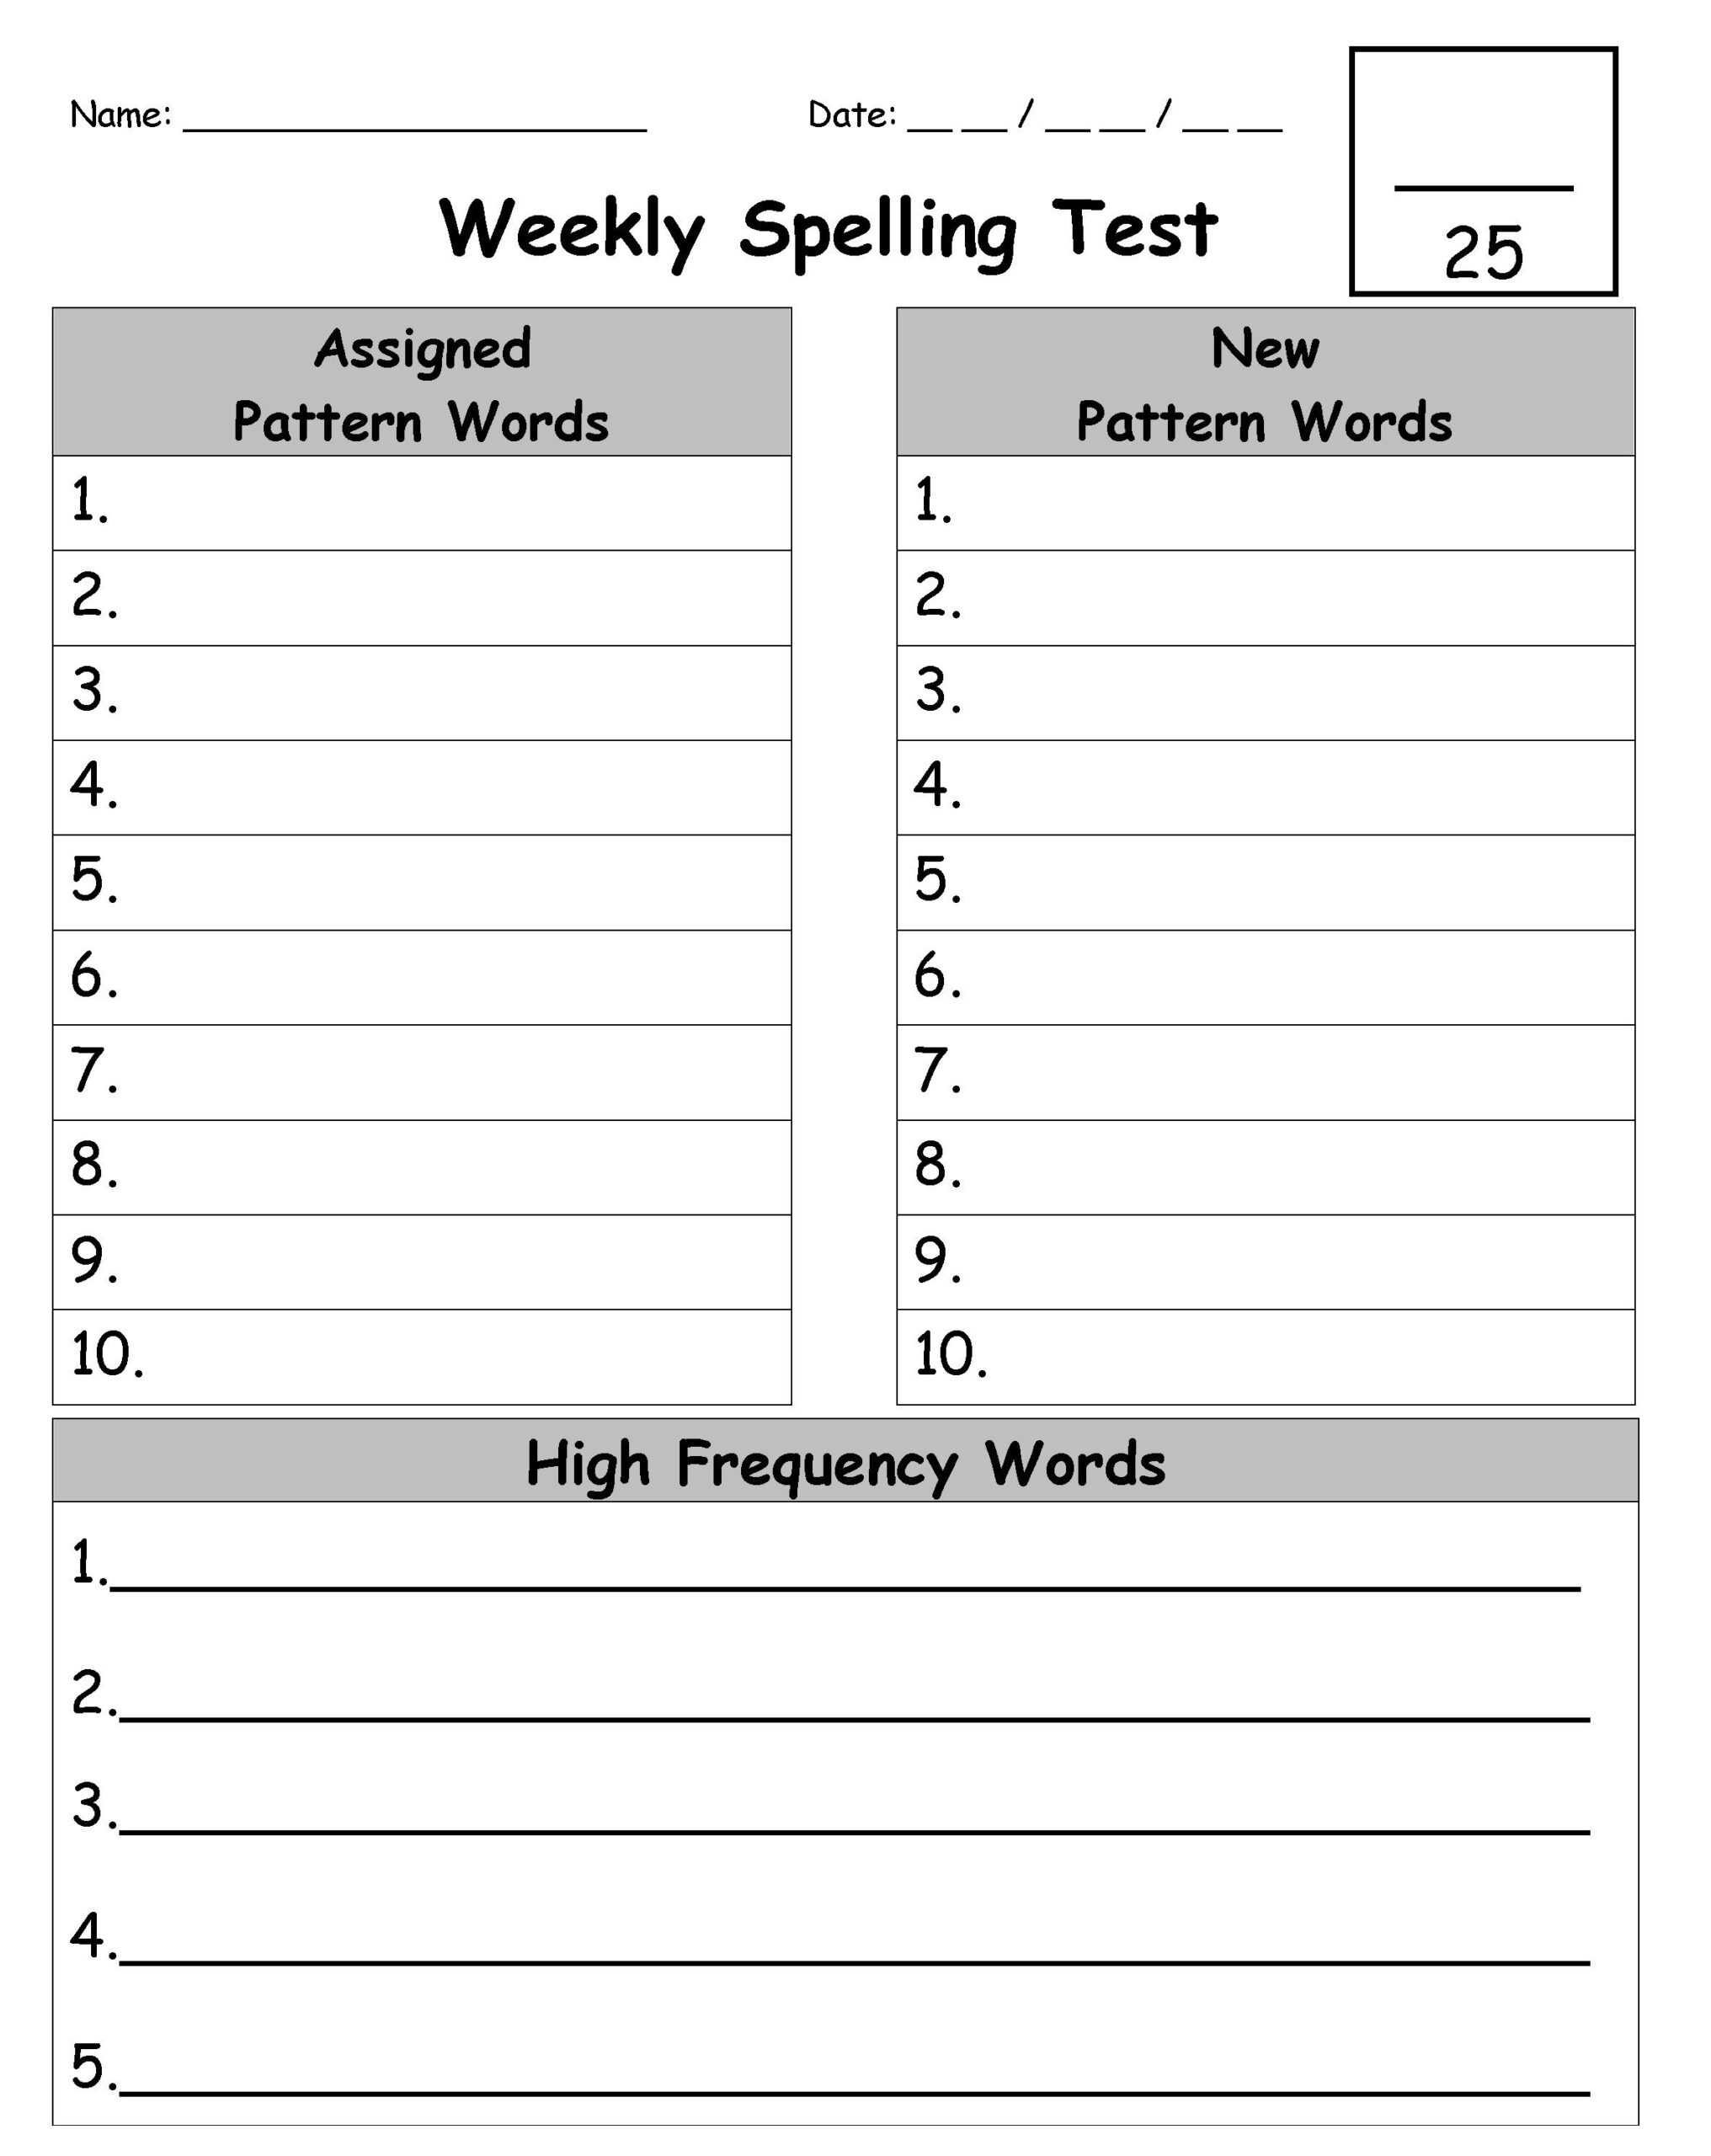 Pin On Edudeas: Spelling Regarding Test Template For Word